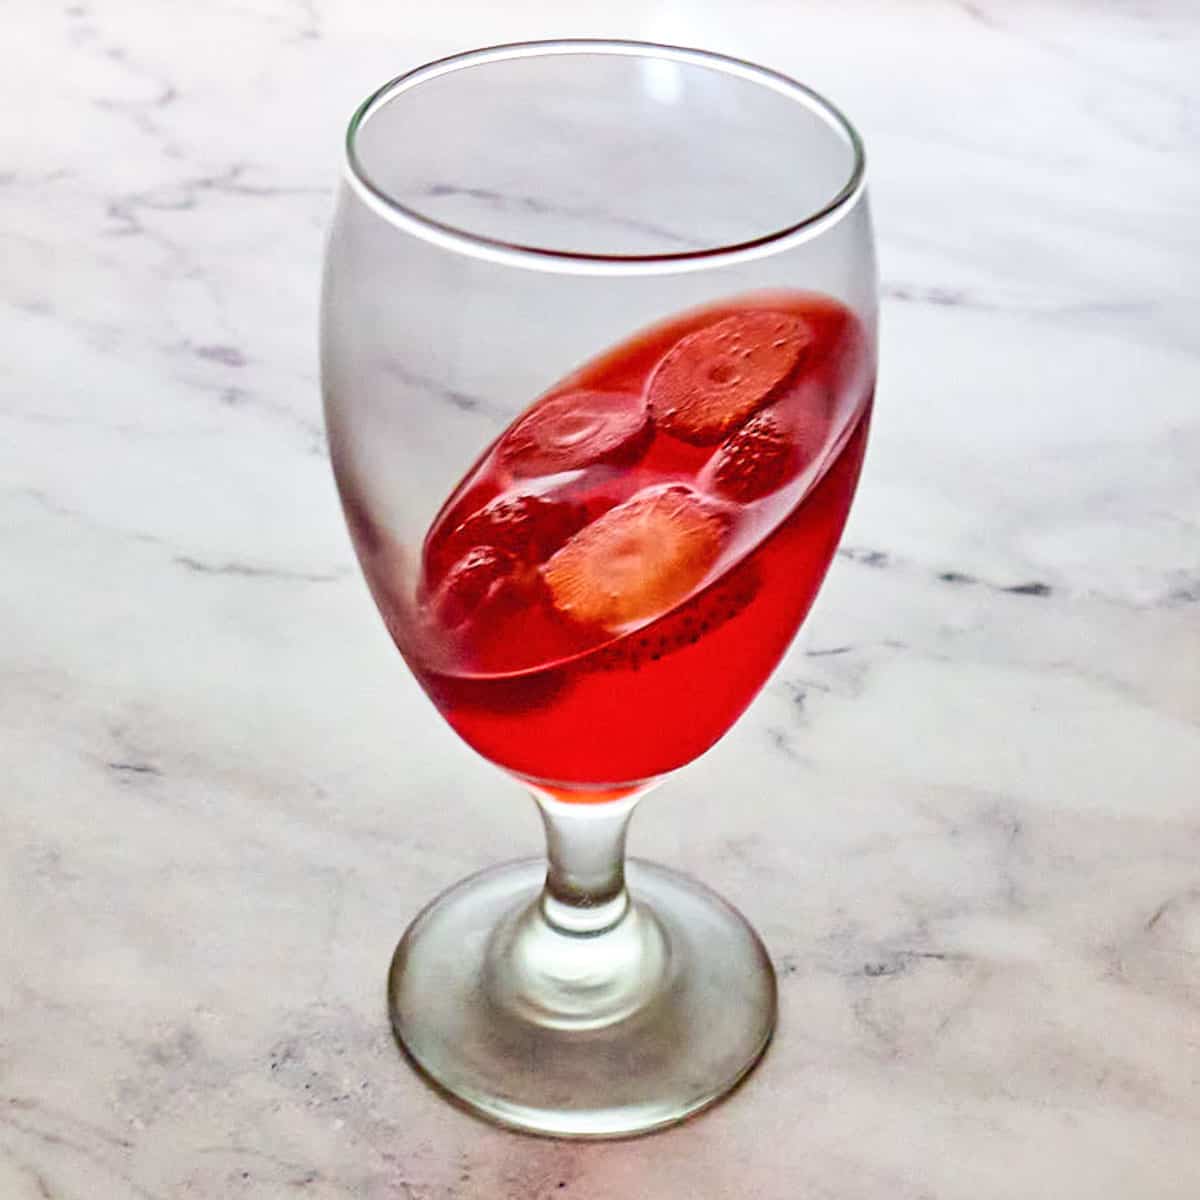 Fresh strawberry slices and strawberry jello in a glass.